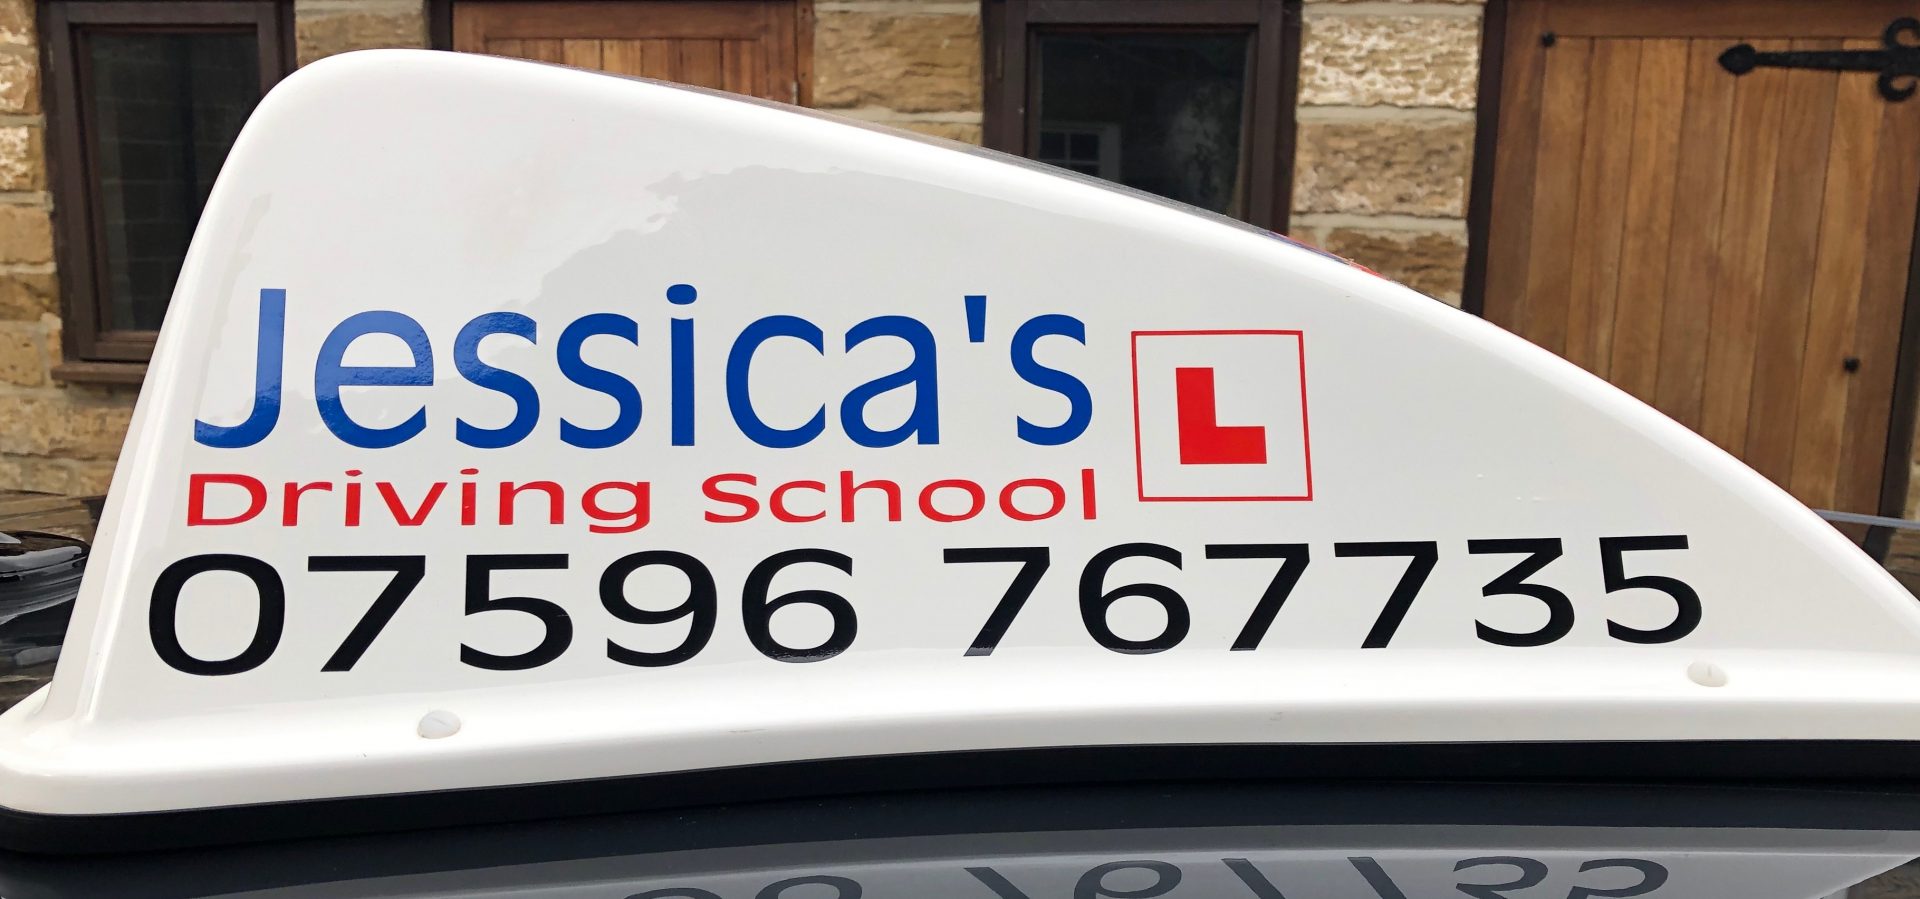 Jessica's Driving School